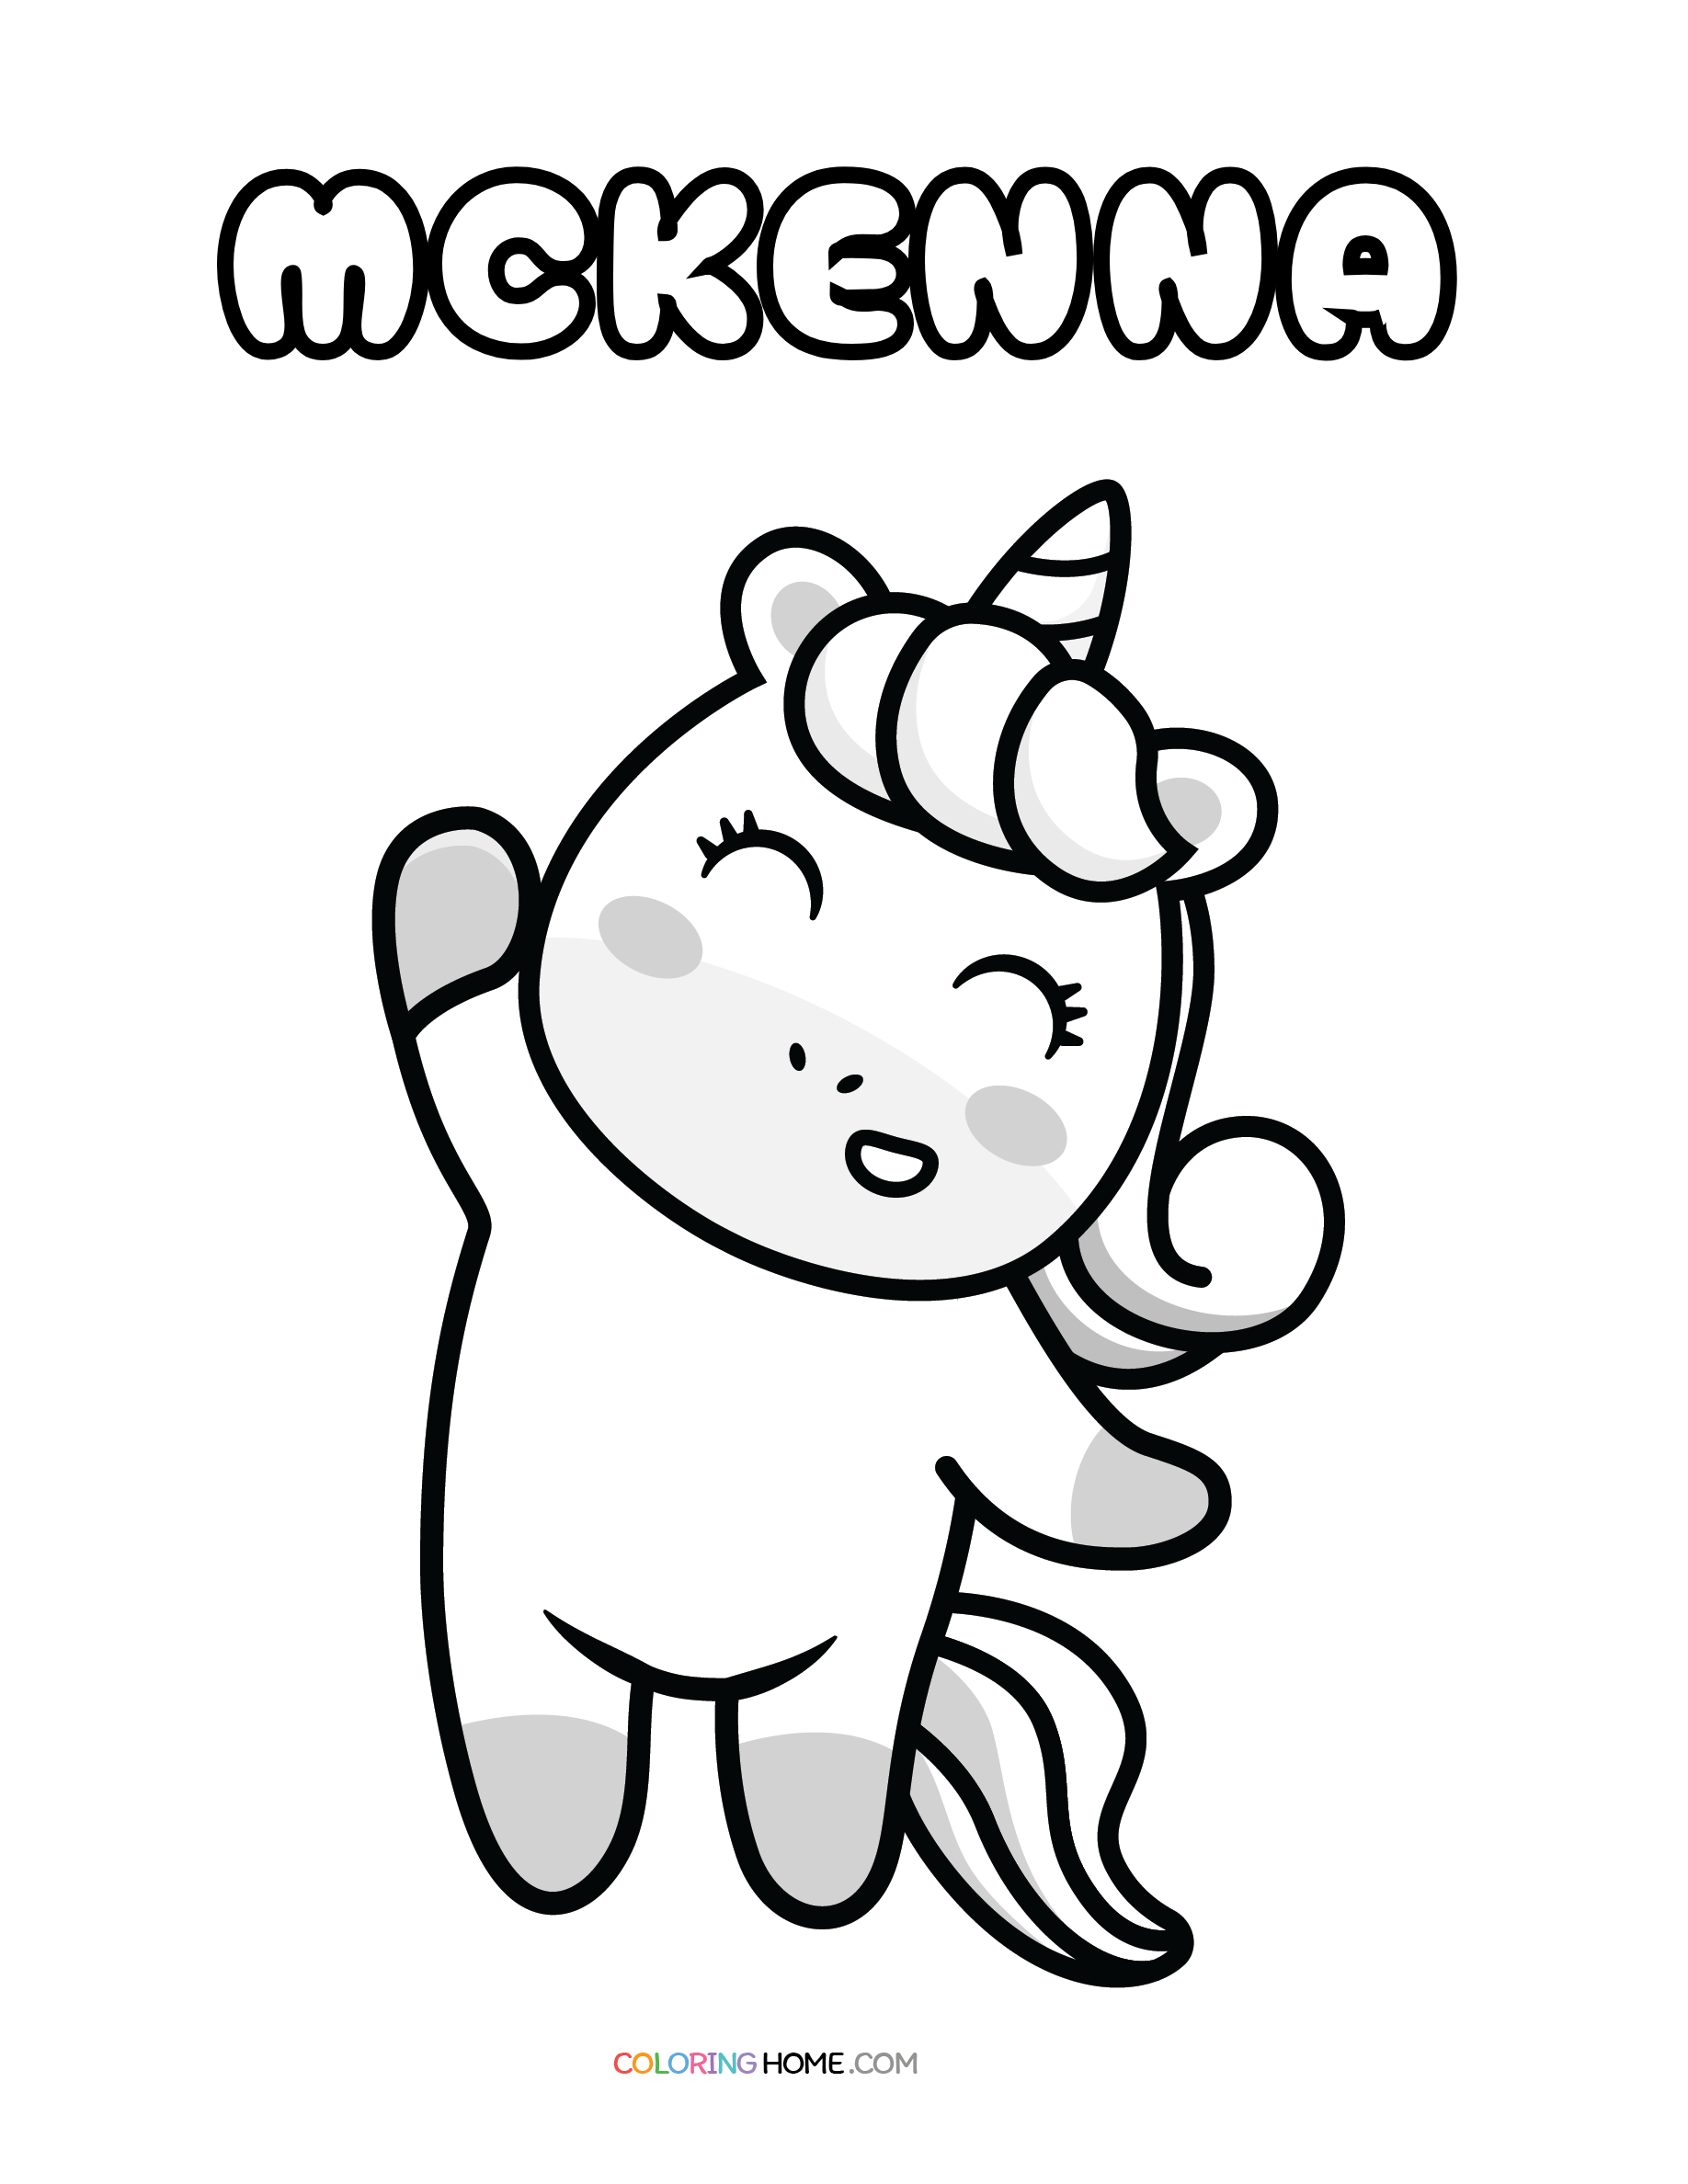 Mckenna unicorn coloring page